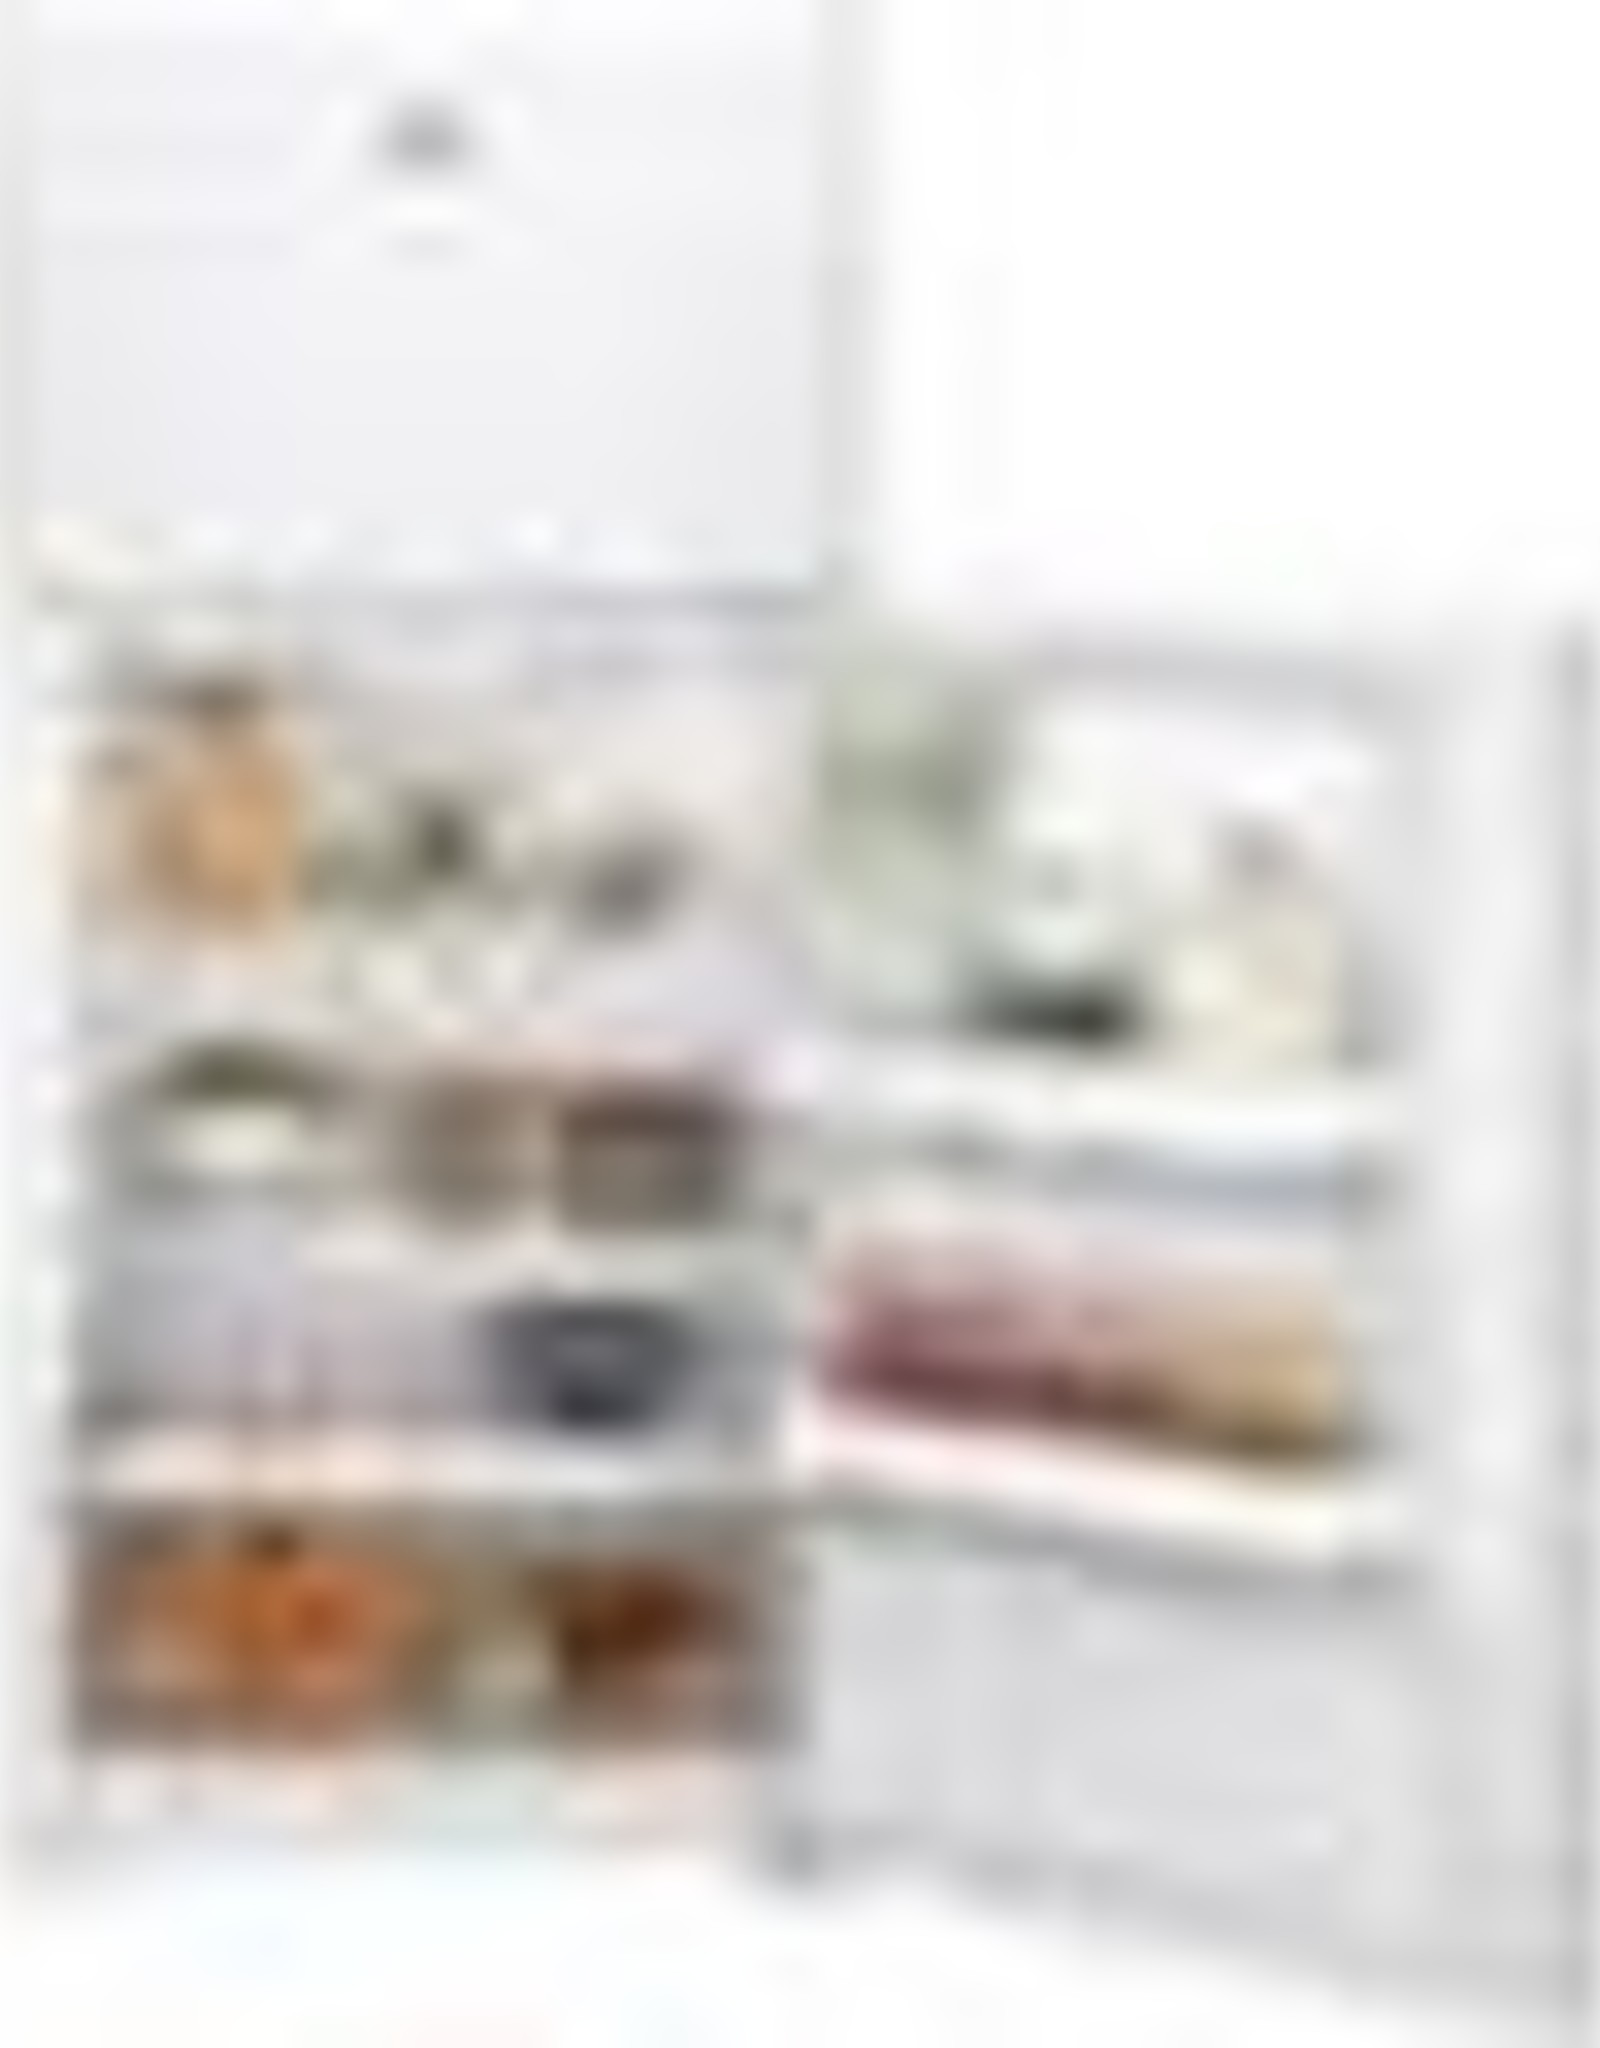 GE Hotpoint 14.6 Cu. Ft. Recessed Handle Top-Freezer efrigerator